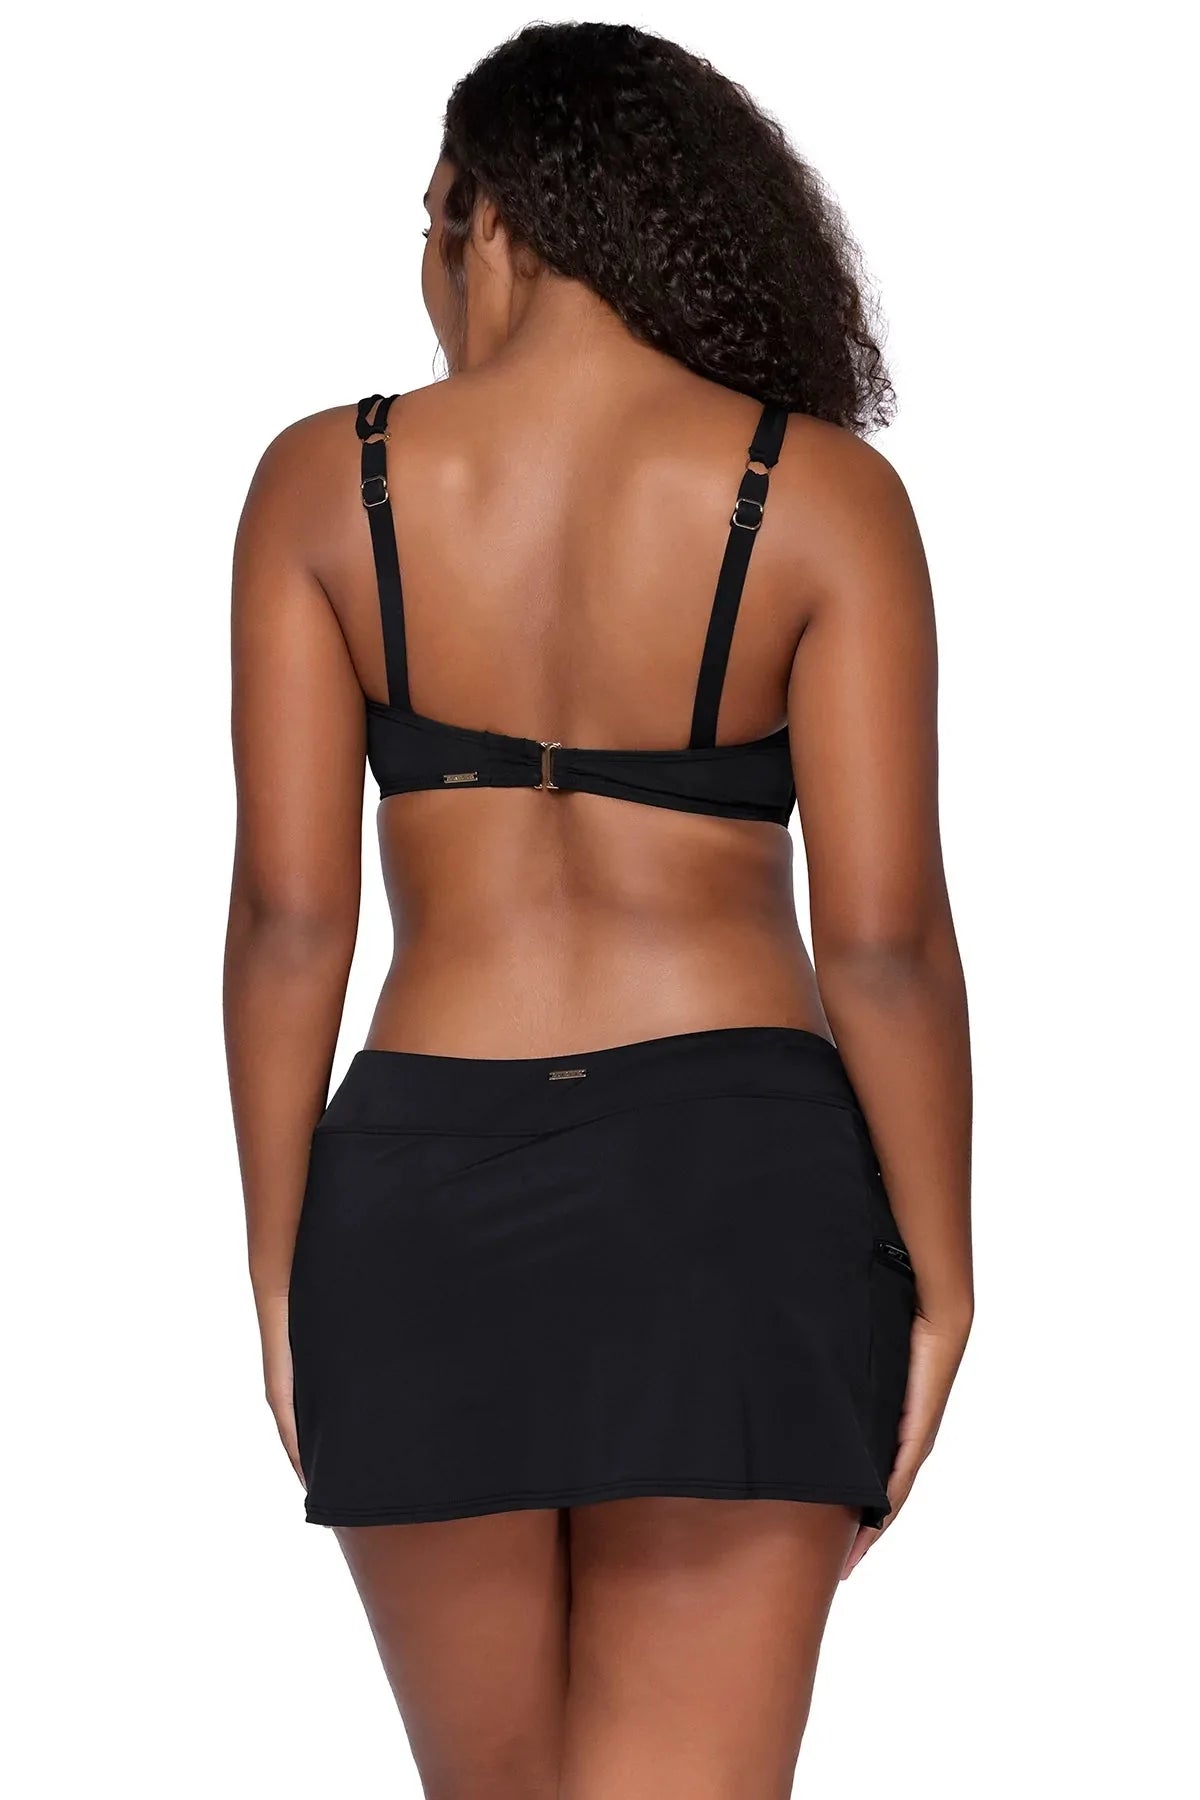 Sunsets Escape "Brands,Swimwear" XS / BLCK / 40B Sunsets Black Sporty Swim Skirt